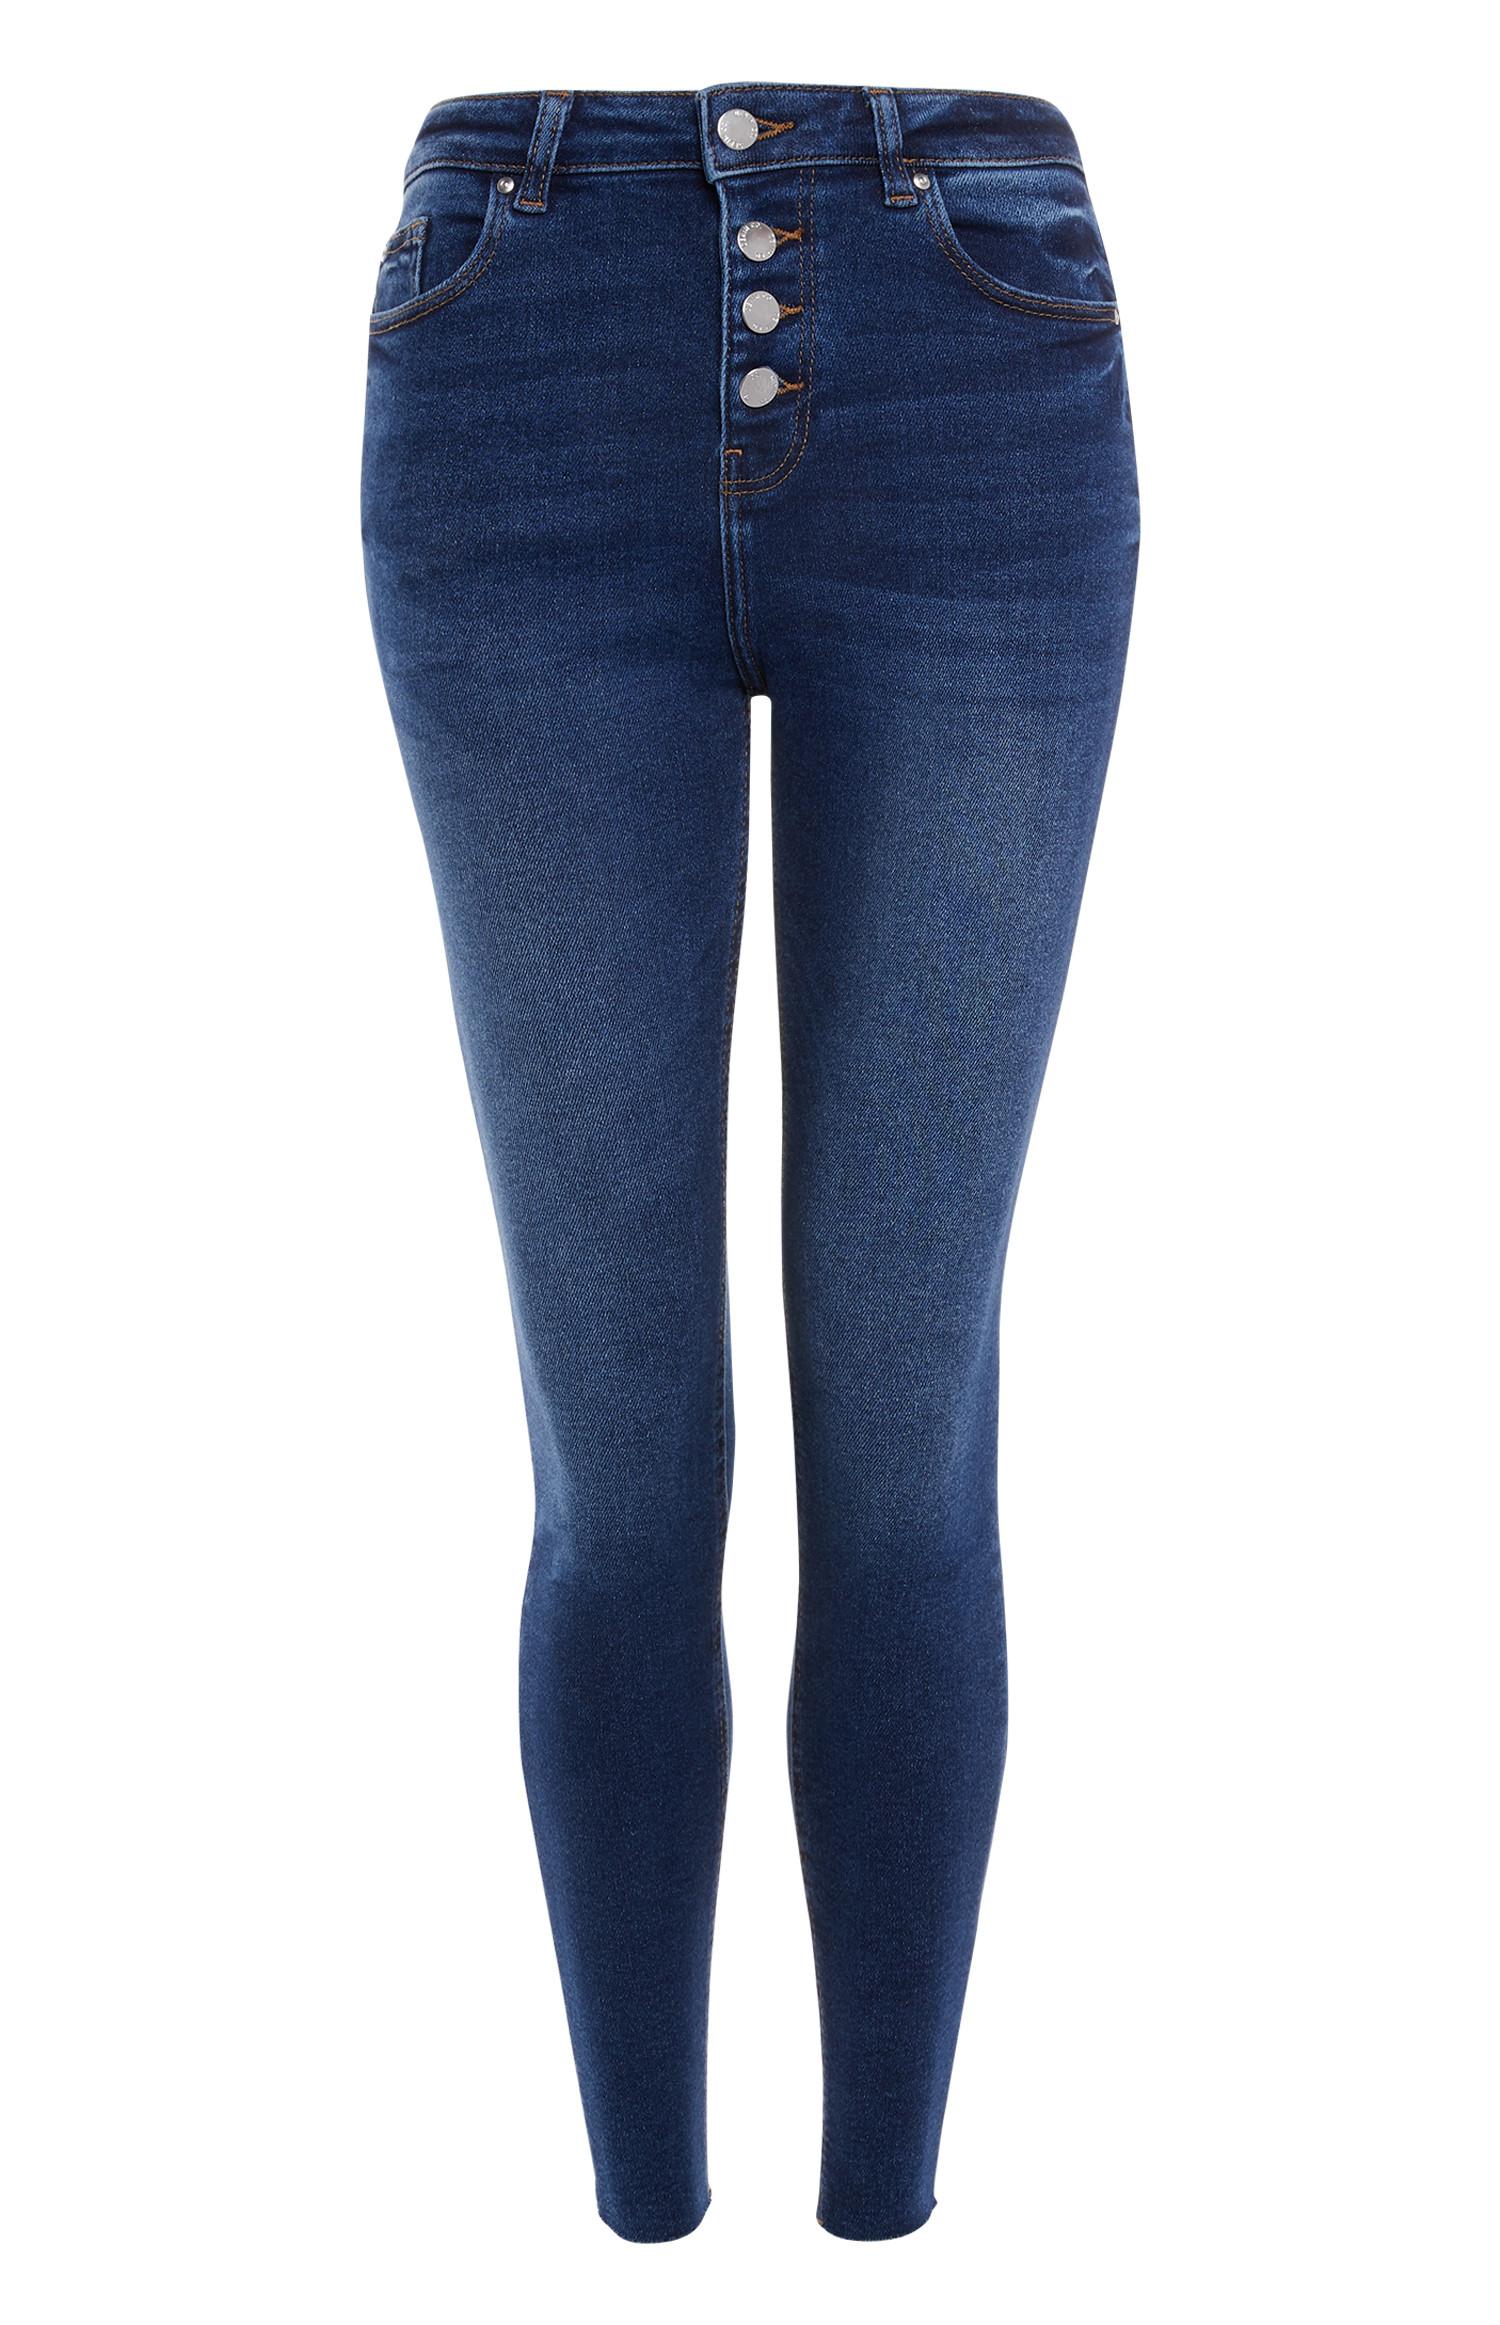 primark girlfriend jeans